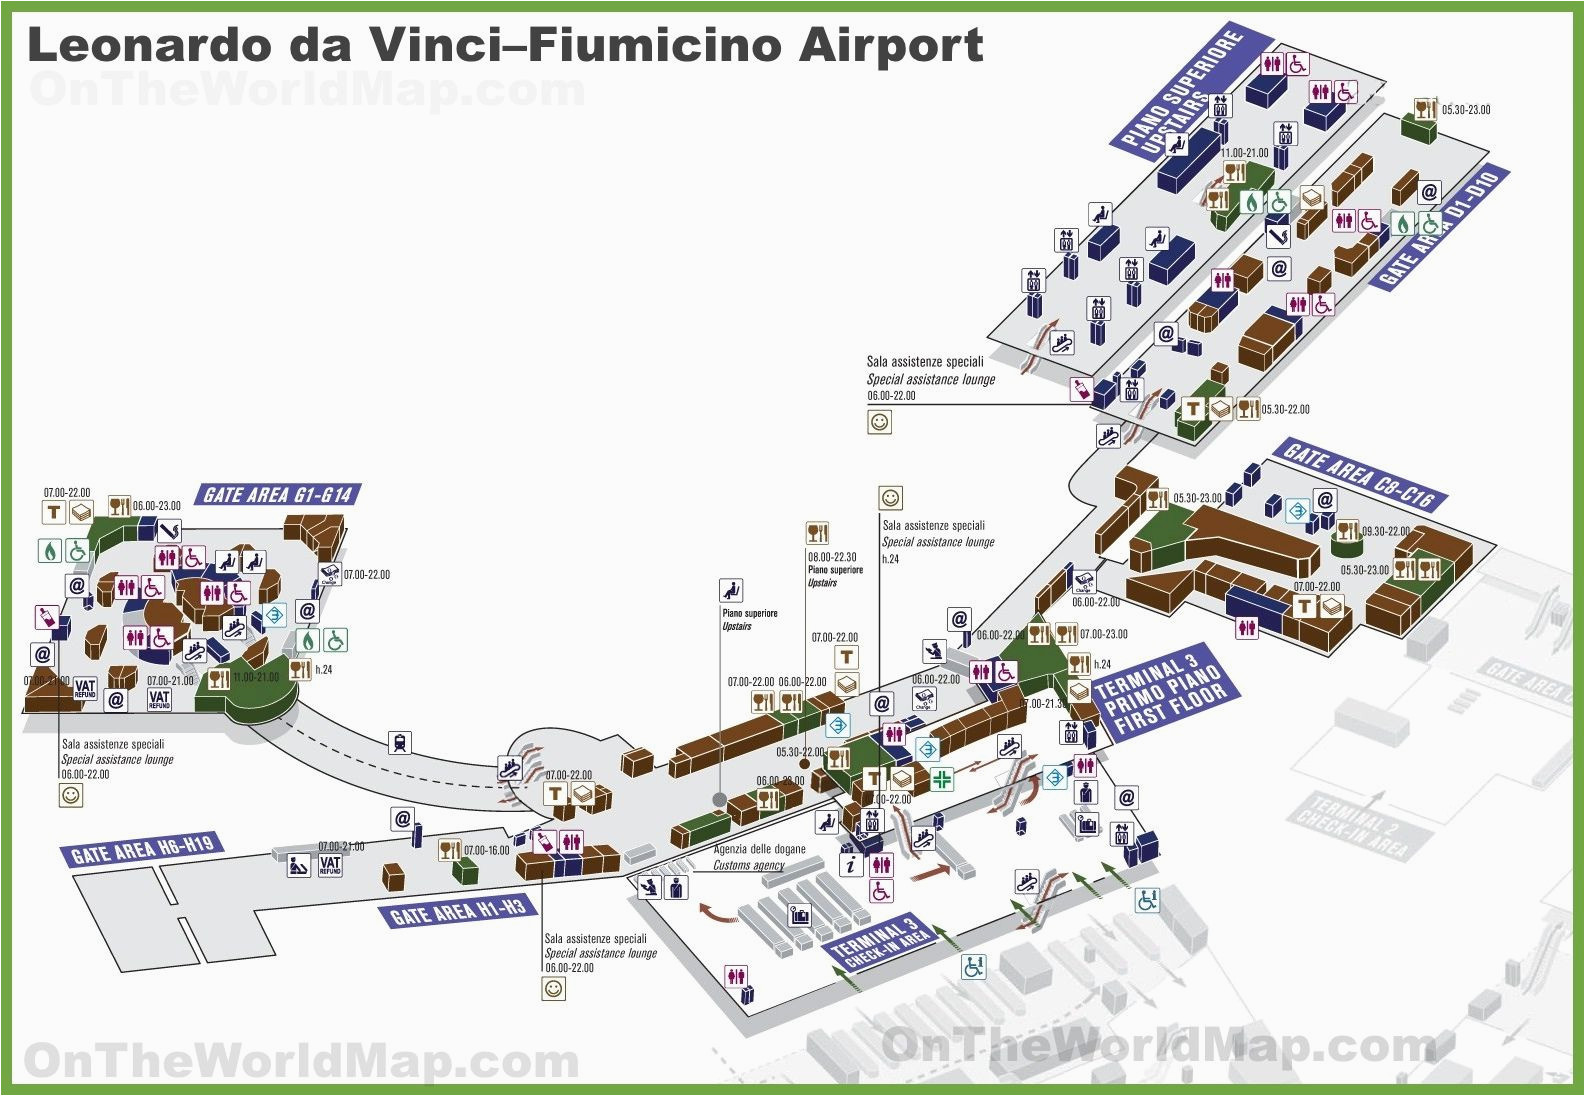 Florence Italy Airport Map Pin By Jeannette Beaver On Pilot In 2019 Leonardo Da Vinci Rome Of Florence Italy Airport Map 